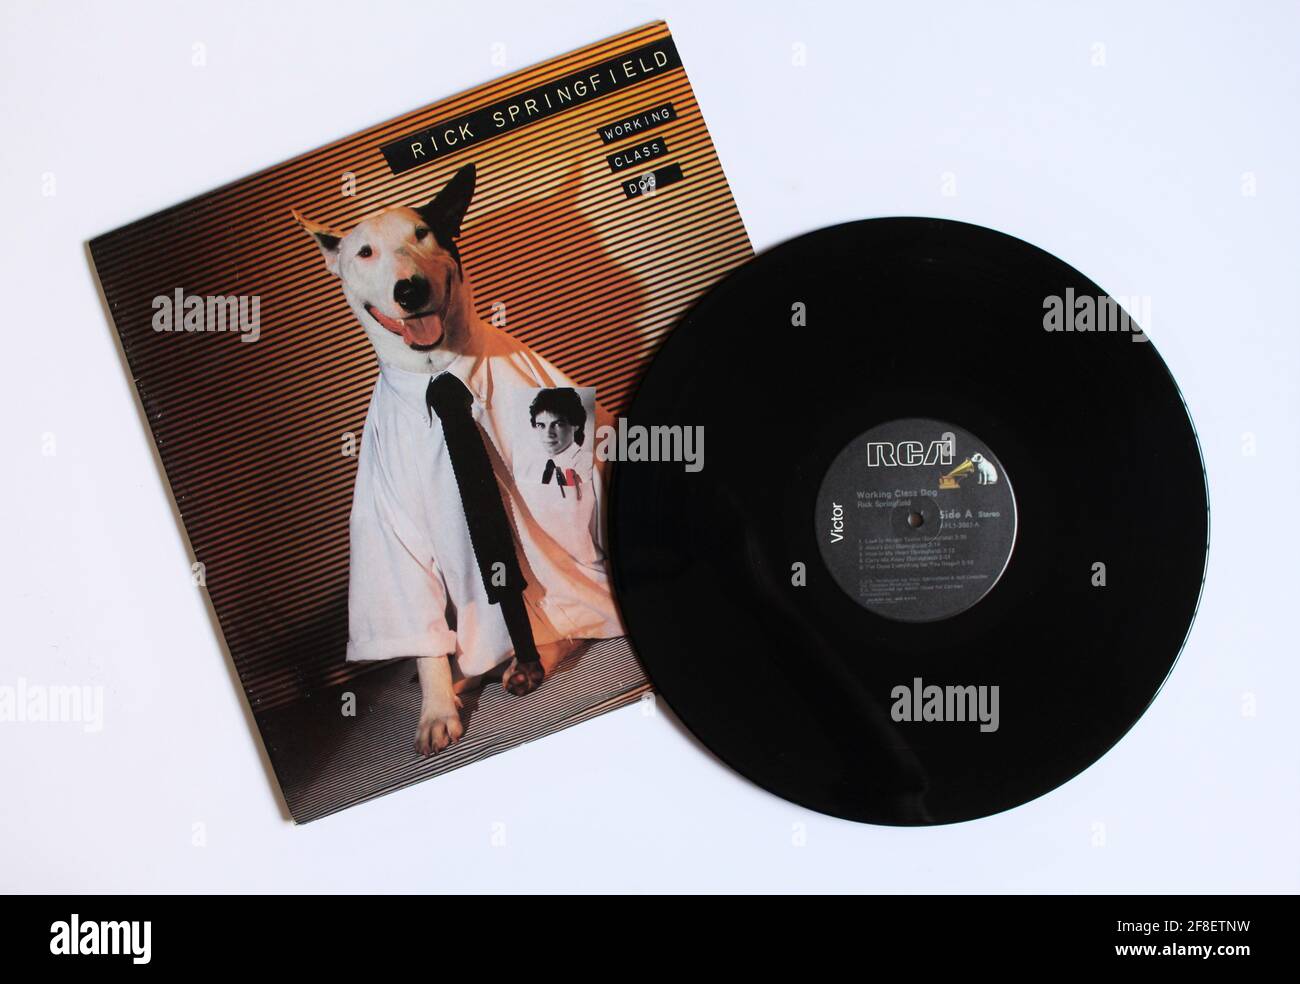 Pop rock artist, Rick Springfield music album on vinyl record LP disc. Titled: Working Class Dog album cover Stock Photo